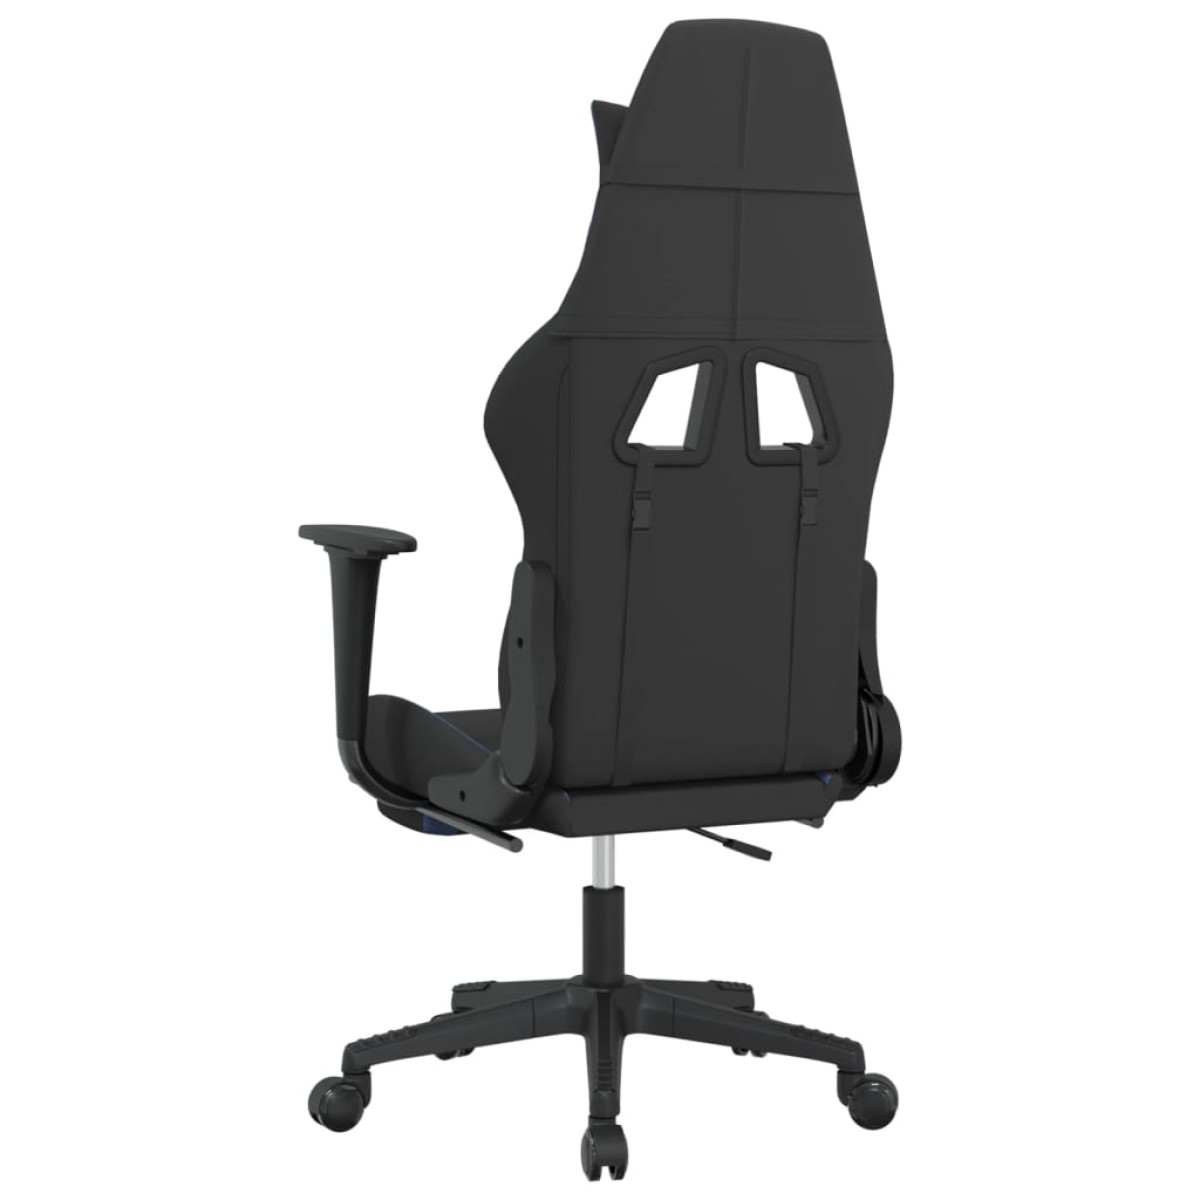 vidaXL Καρέκλα Gaming Μαύρη/Μπλε Ύφασμα με Υποπόδιο